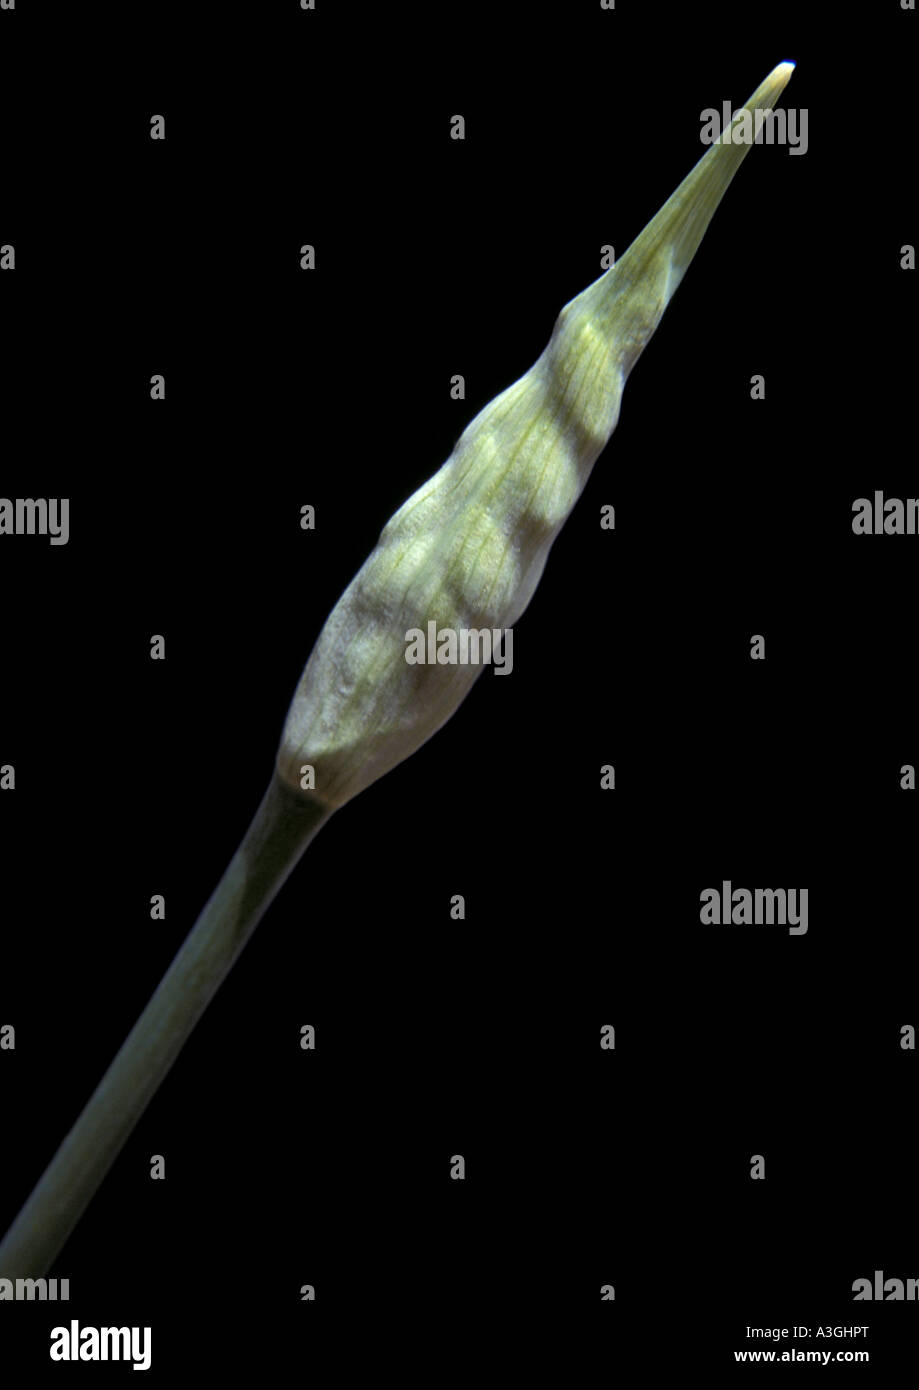 Agapanthus seed pod against black background Stock Photo